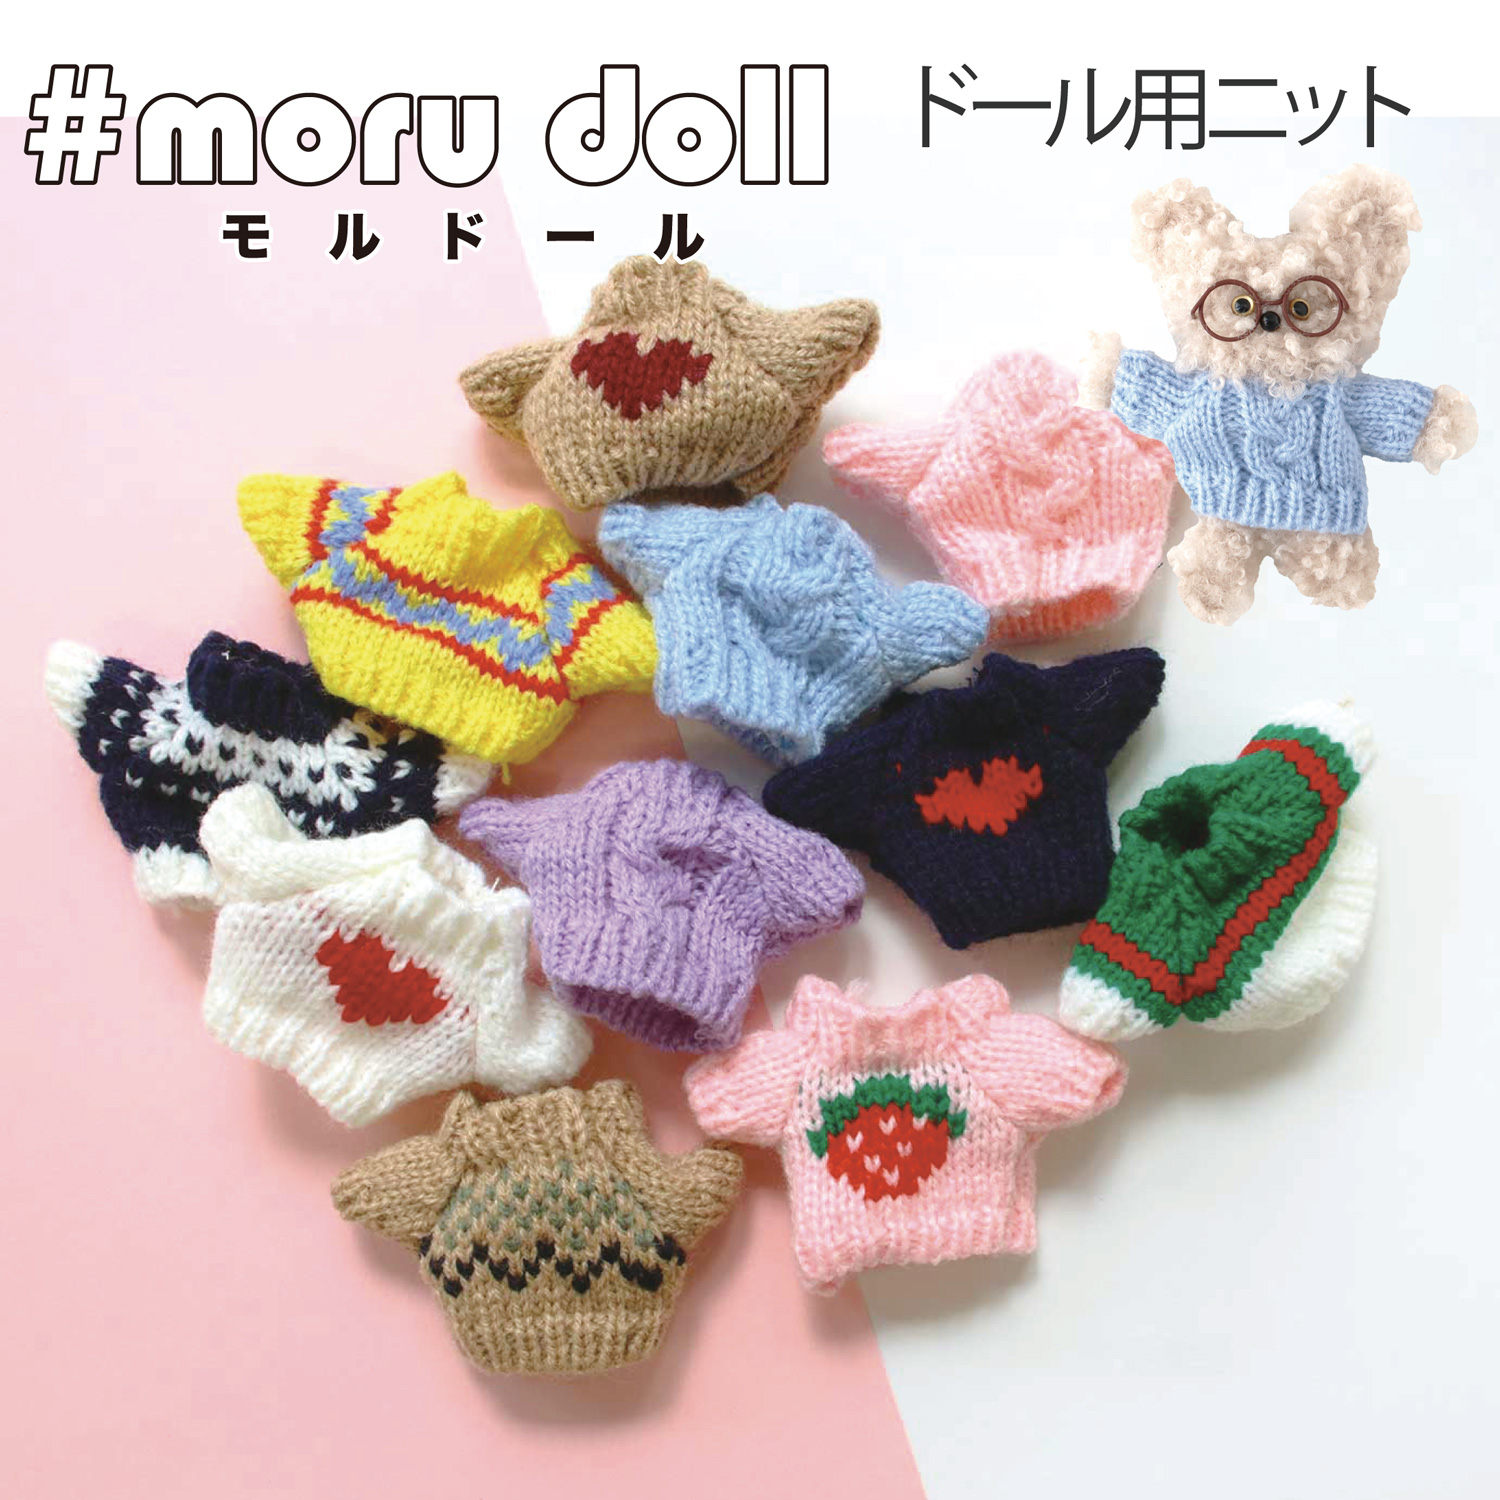 MOL モール人形 モールドール  モルドール用ニット (袋)